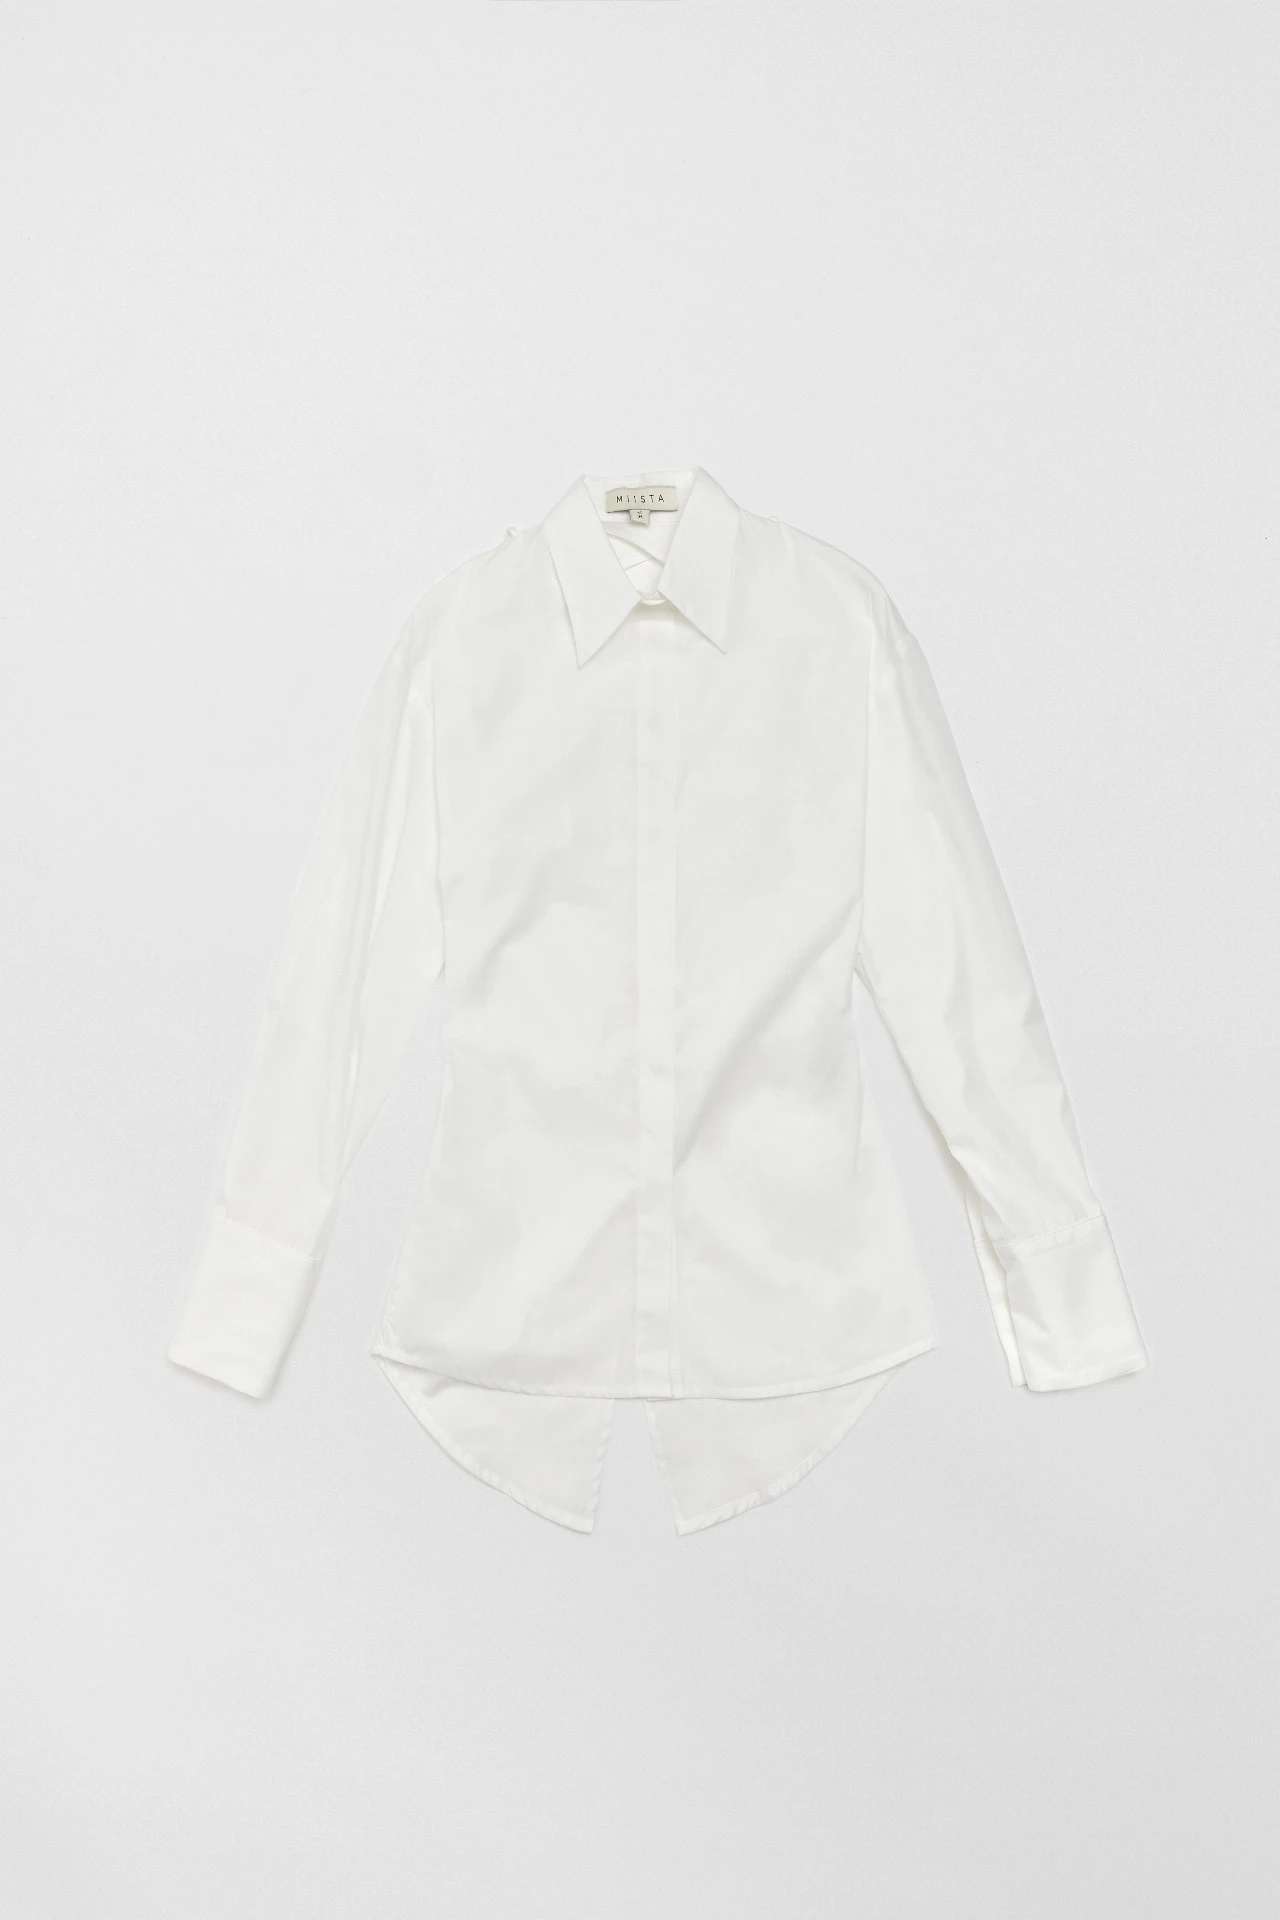 Miista-iryna-off-white-shirt-01